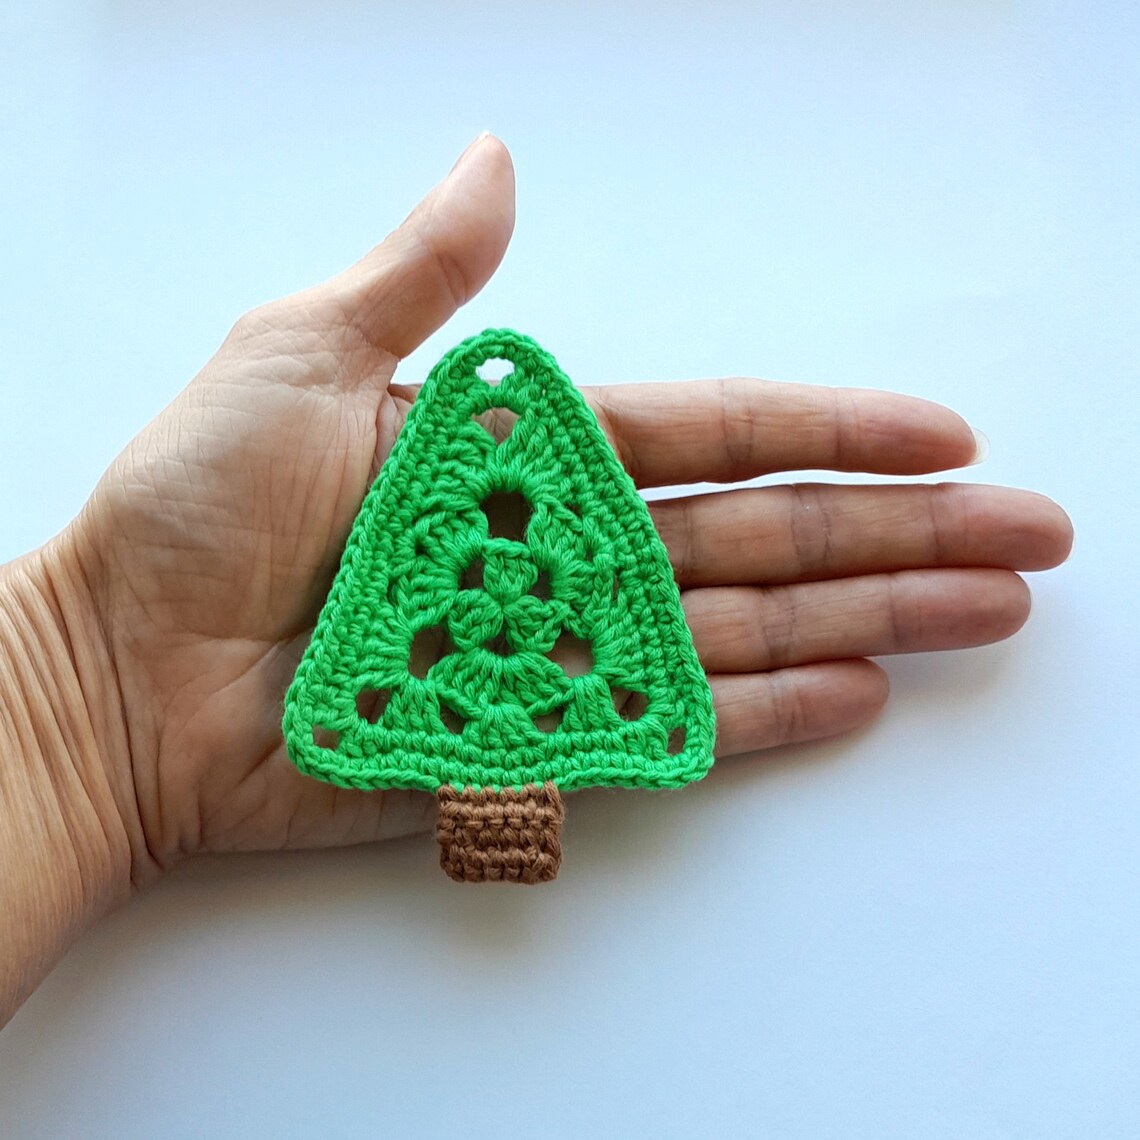 Crochet Christmas Tree Pattern
etsy.com/listing/155501…

#Etsy #EtsyShop #EtsySeller #EtsySocial #crochet #GrannySquarePattern #crochetpattern #CrochetPatterns #grannysquare #grannysquares #crocheter #crocheting #crochetideas #handmade #craft #idea #giftidea #gift #gifts